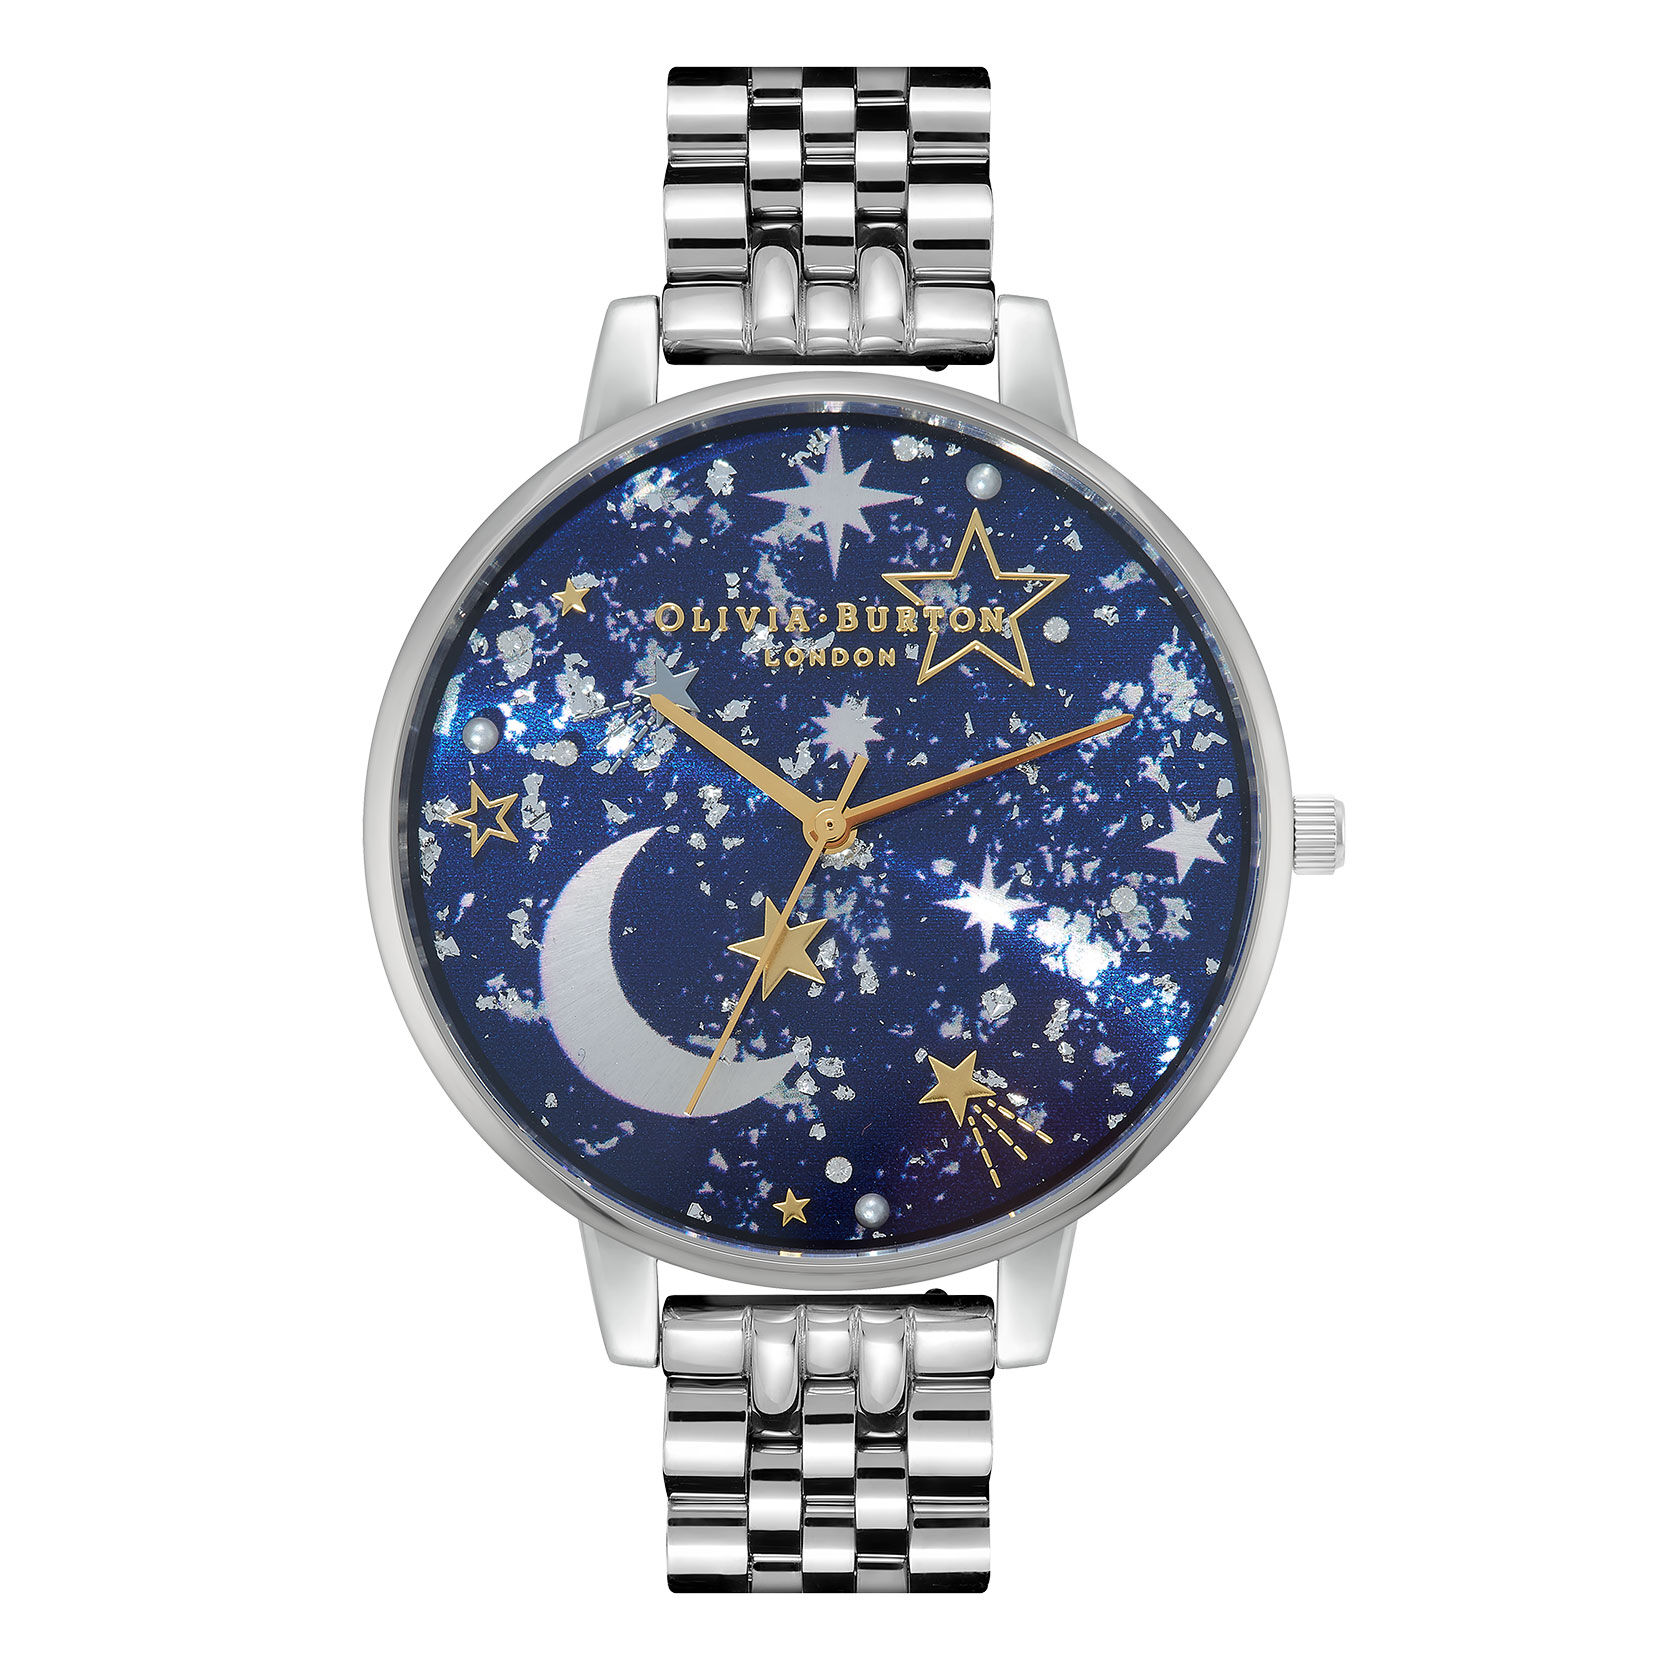 Celestial Navy Sunray, Gold & Silver Watch